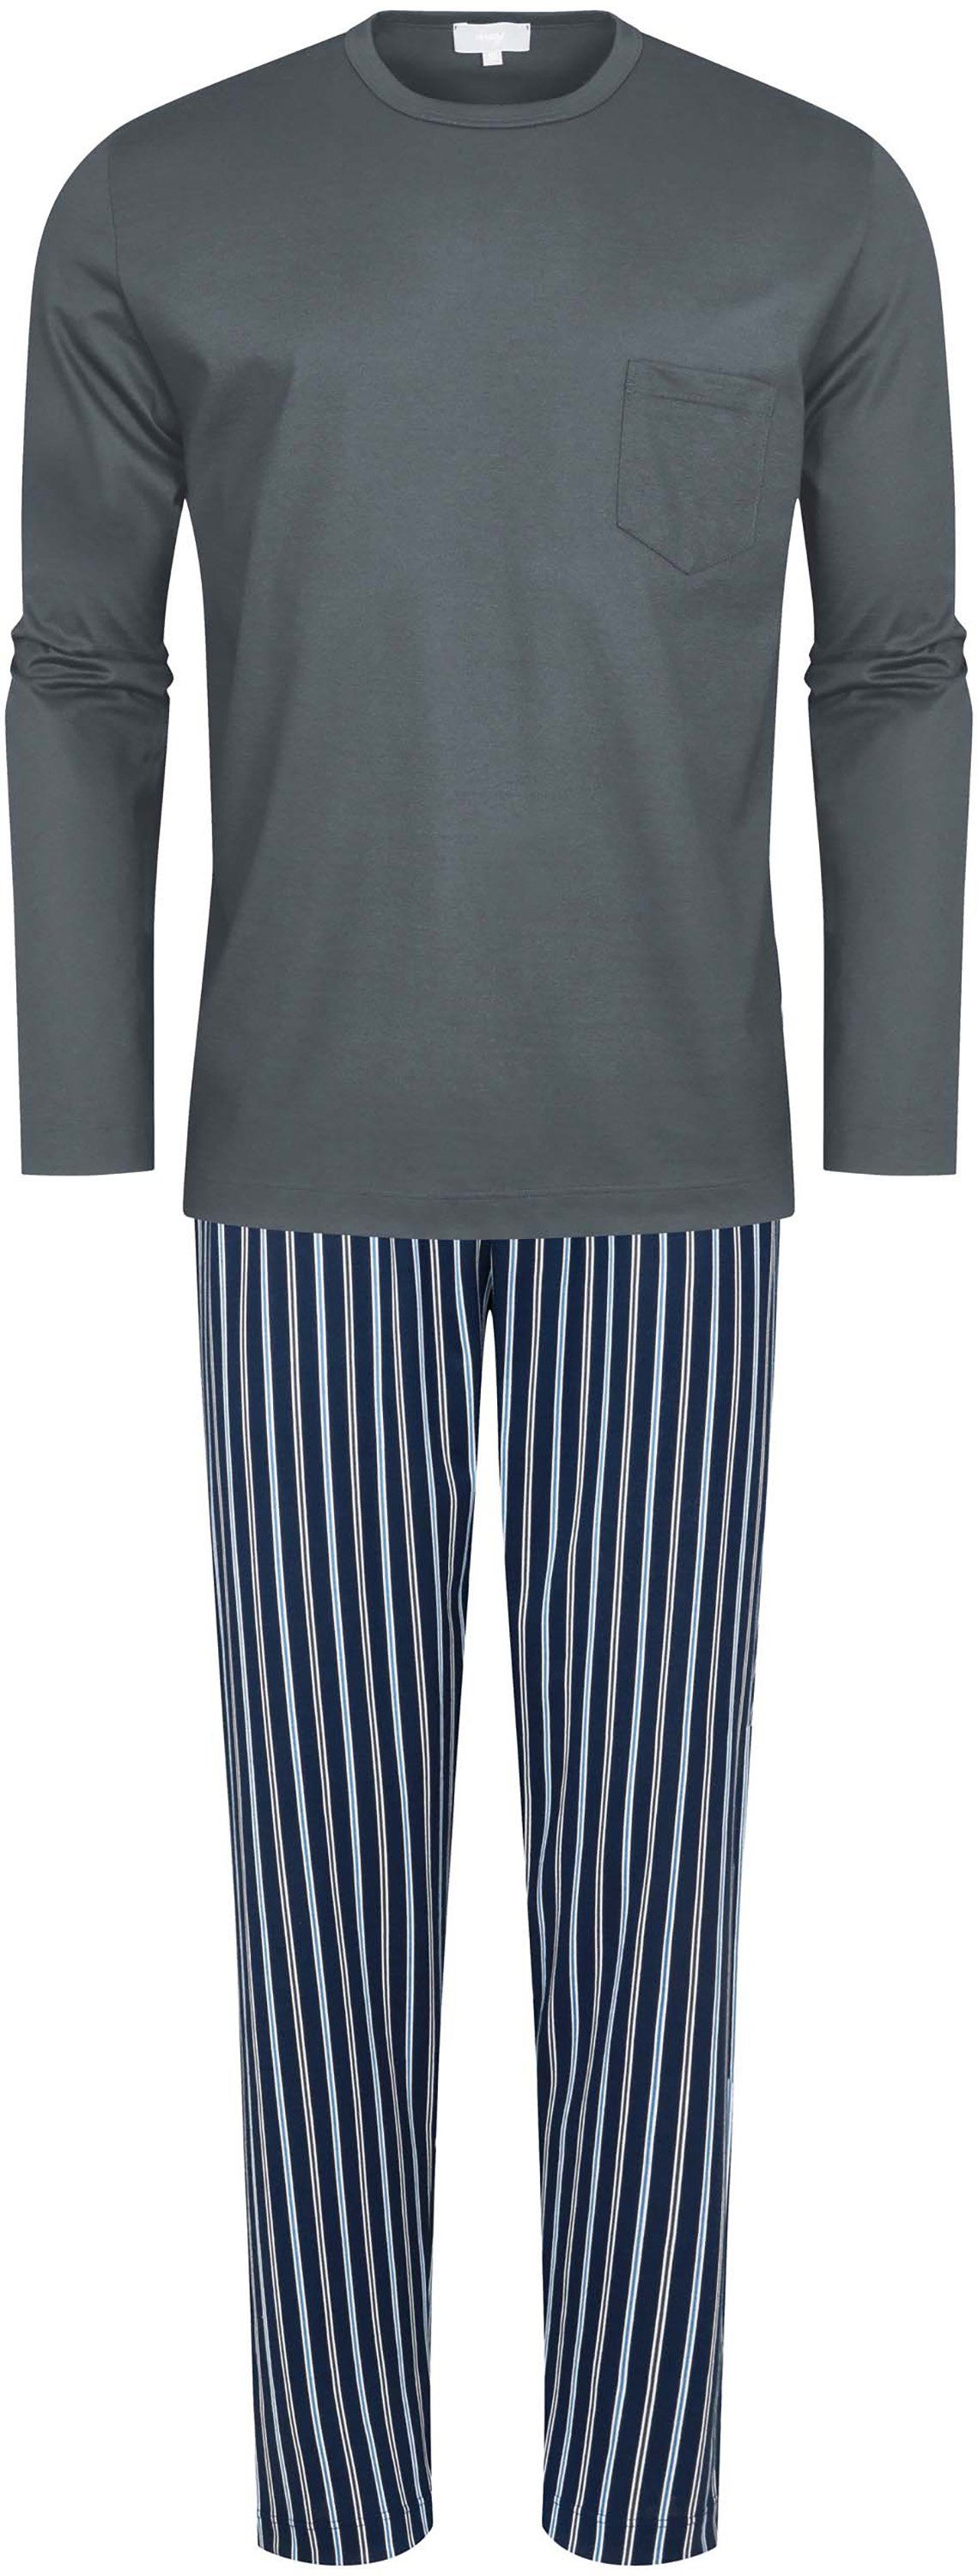 Mey Nightwear Portimo Long Grey size 38-R